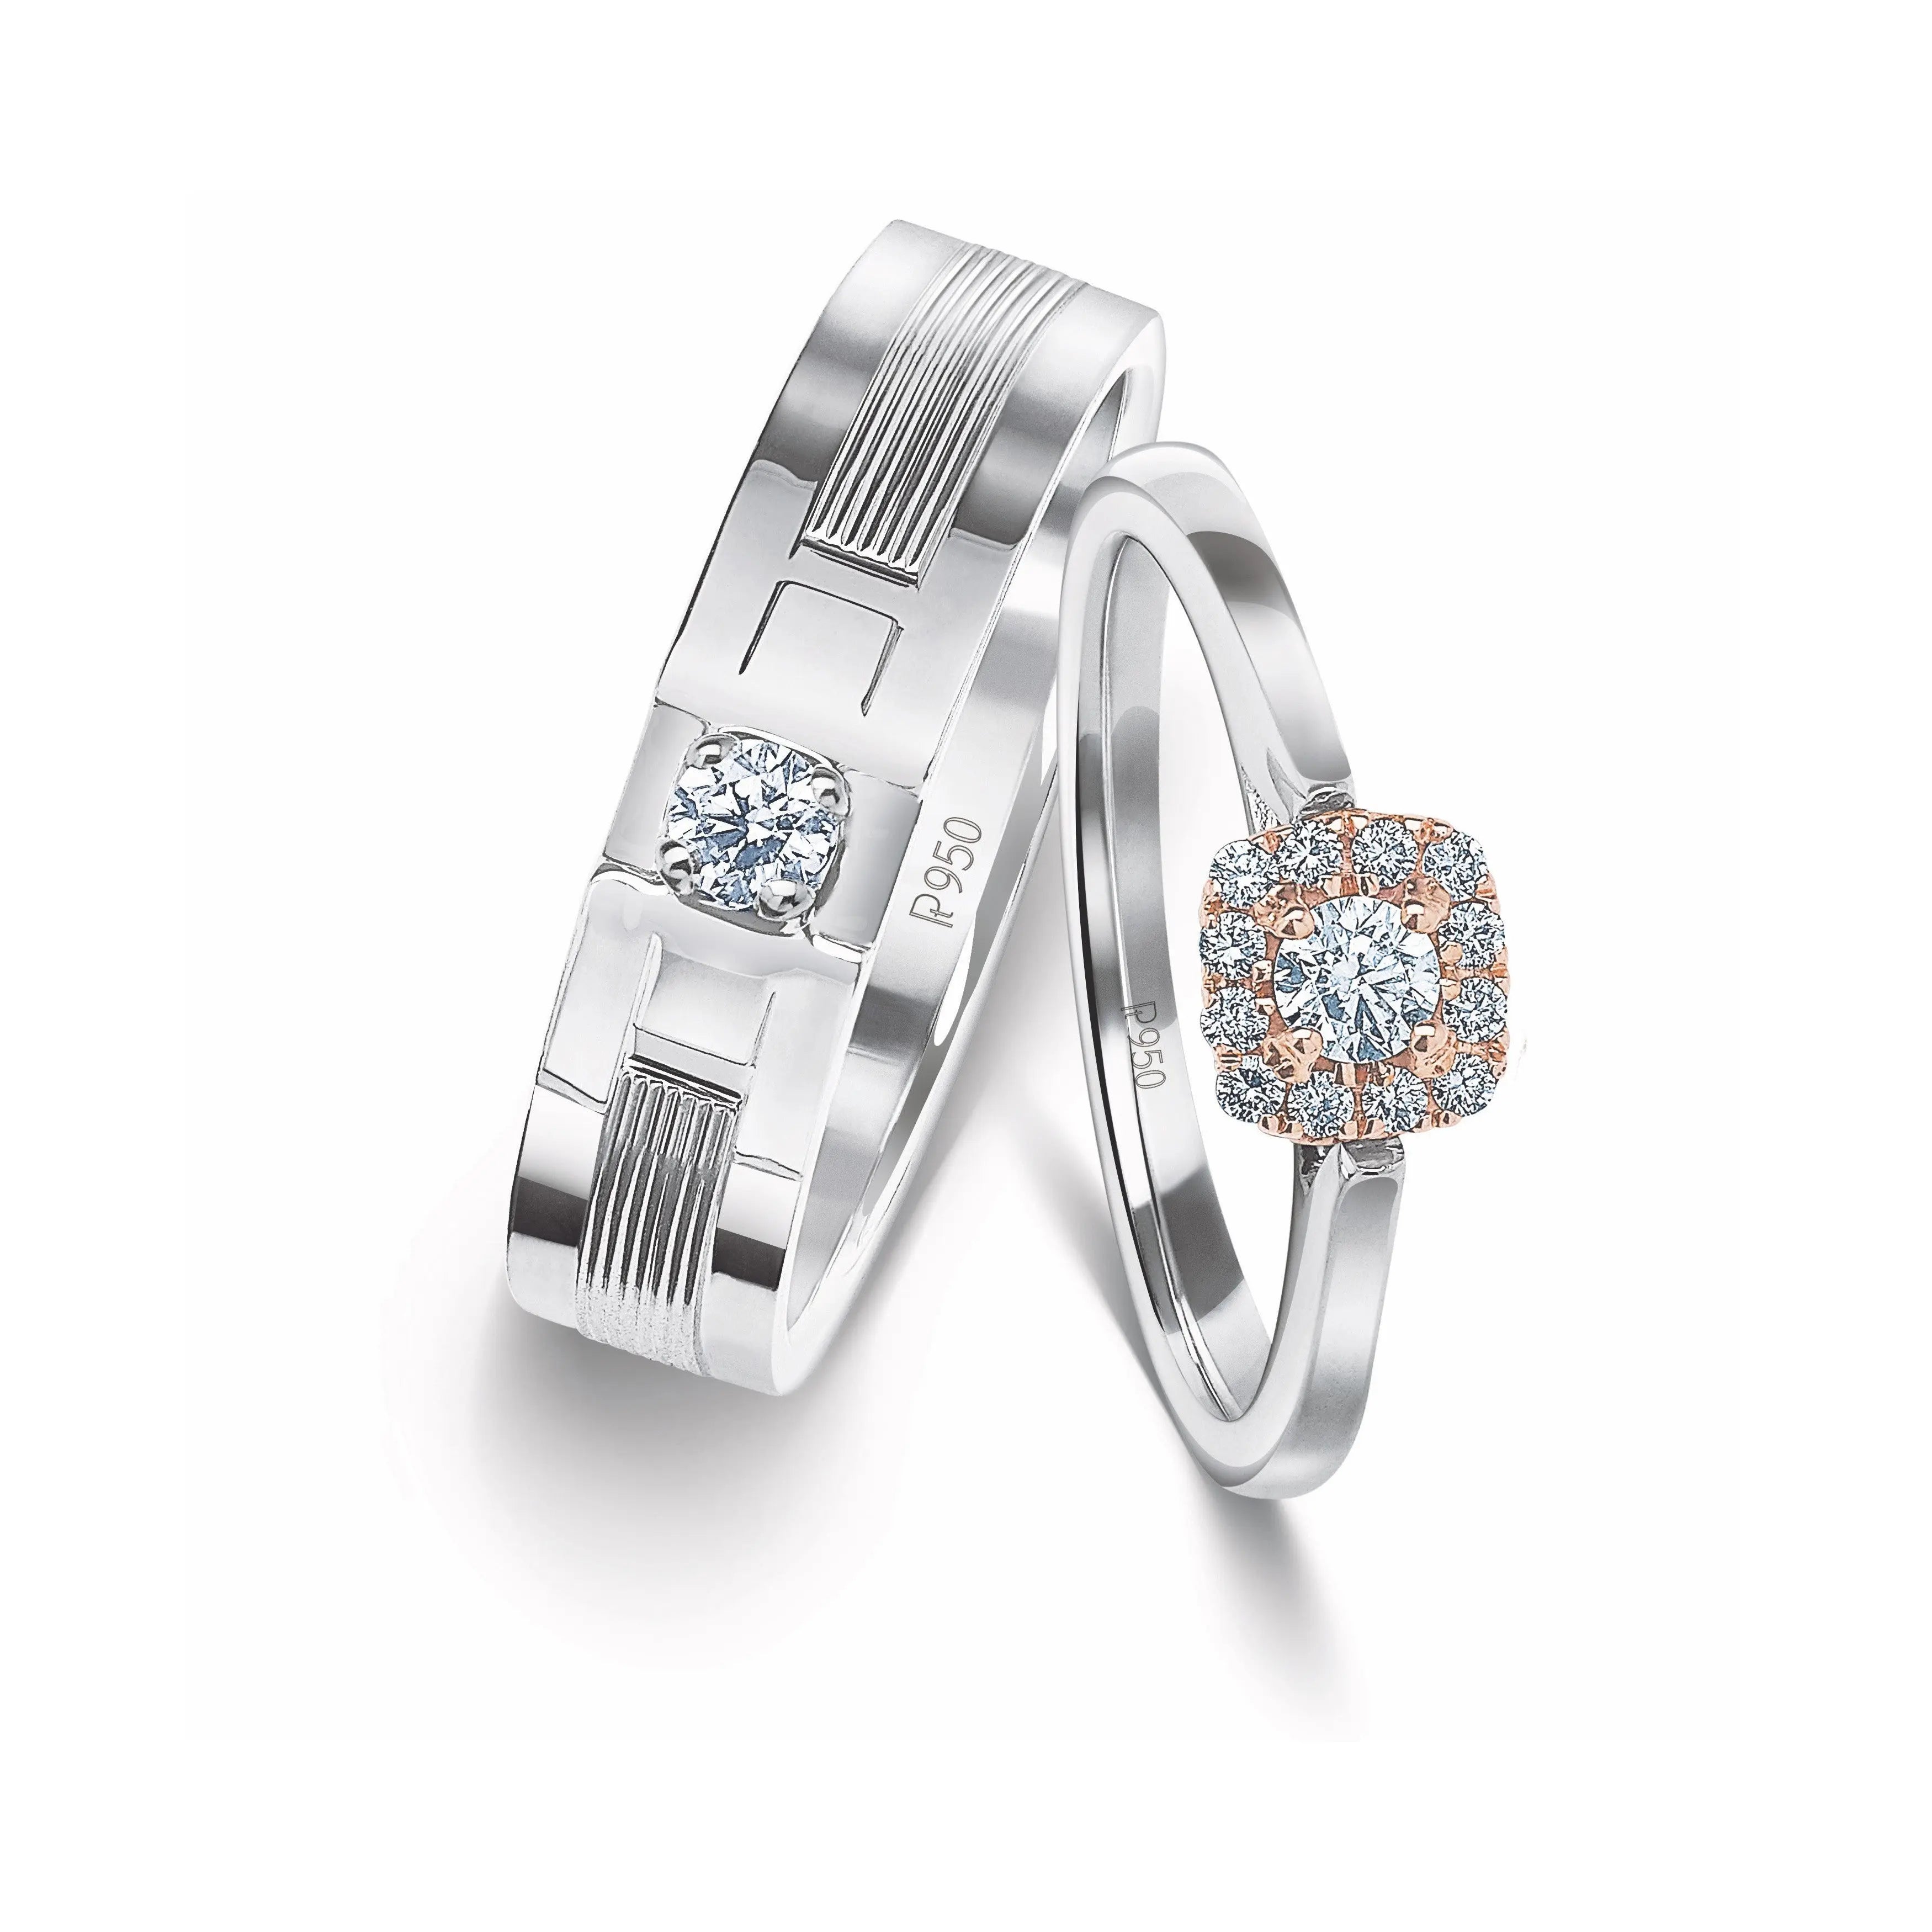 Designer Platinum Couple Rings with Diamonds JL PT 920  Both Jewelove.US